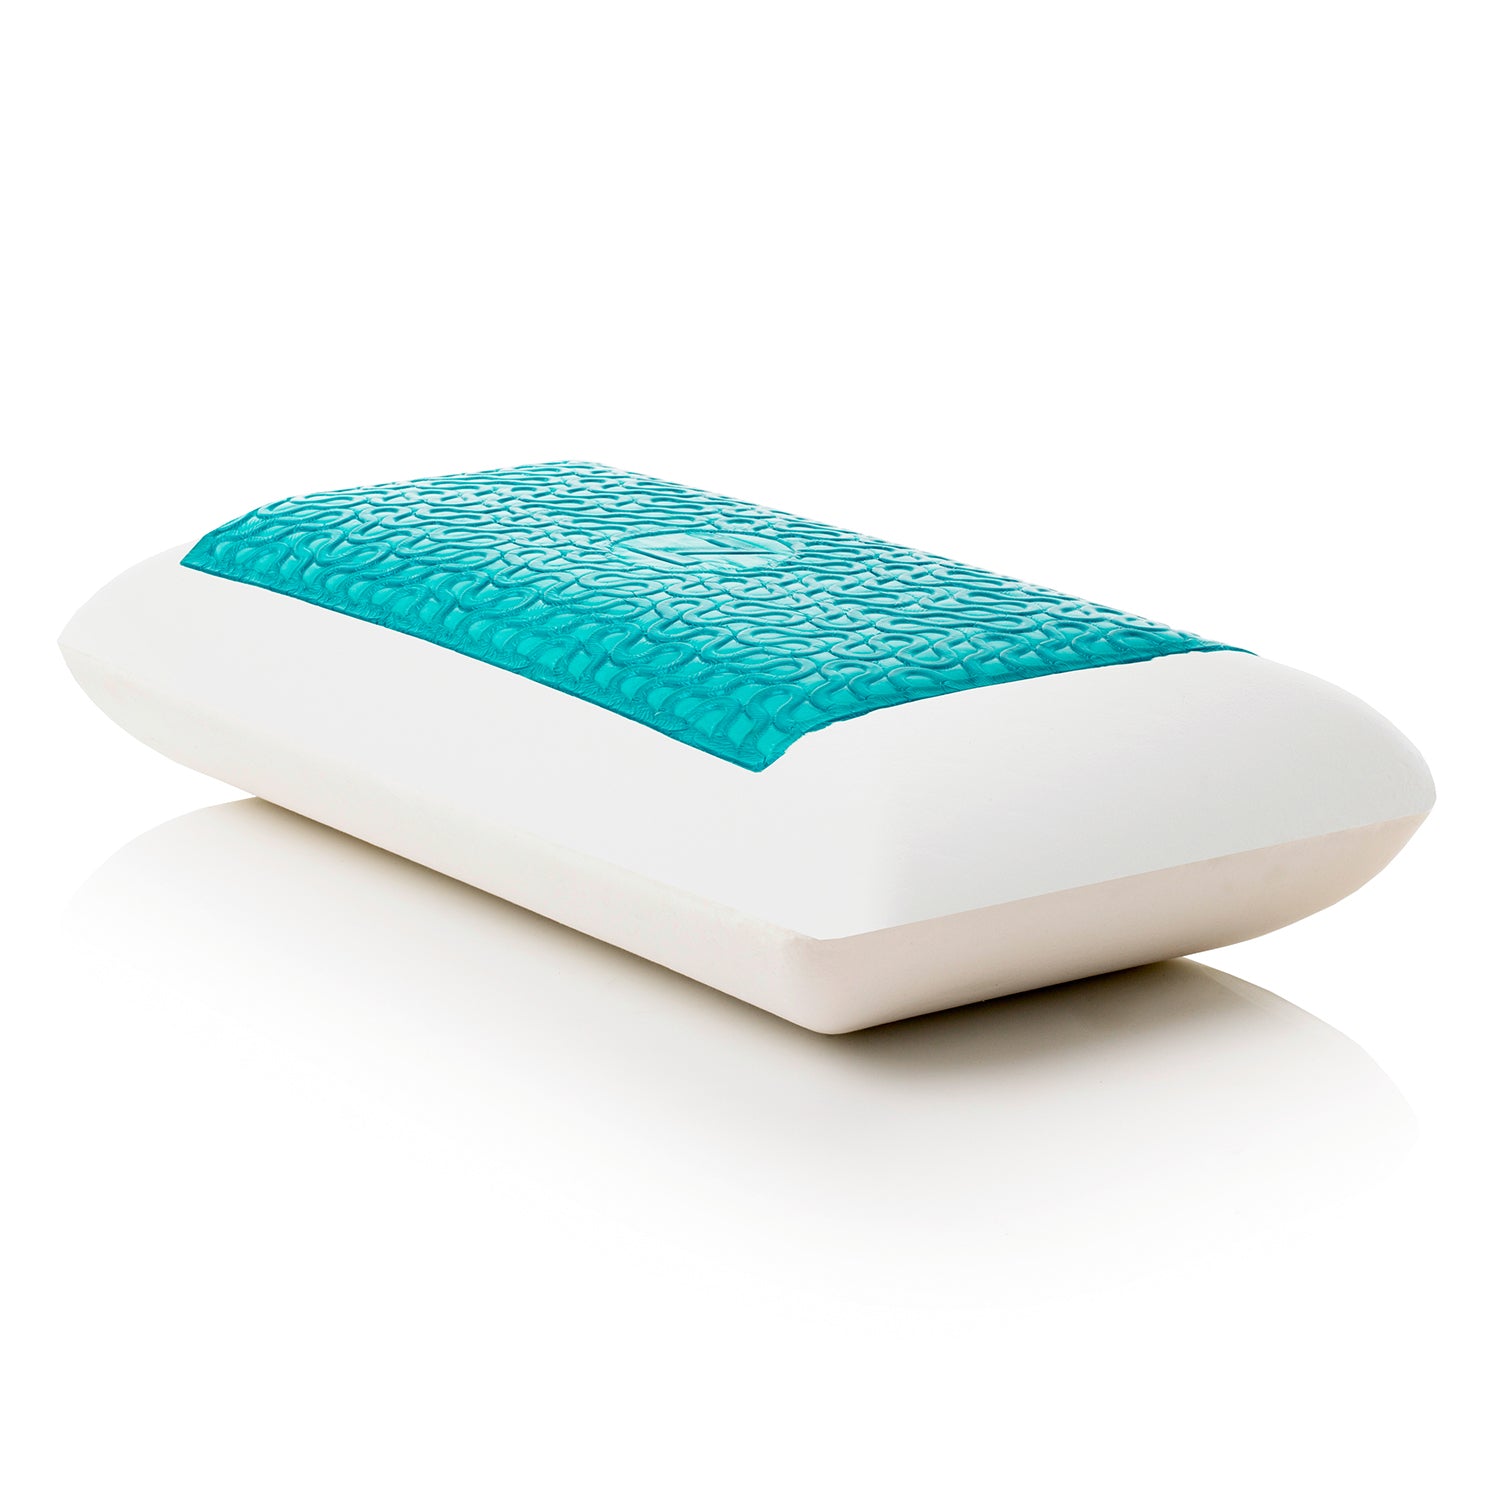 Dough Gel Pillow - Ultimate Comfort Sleep